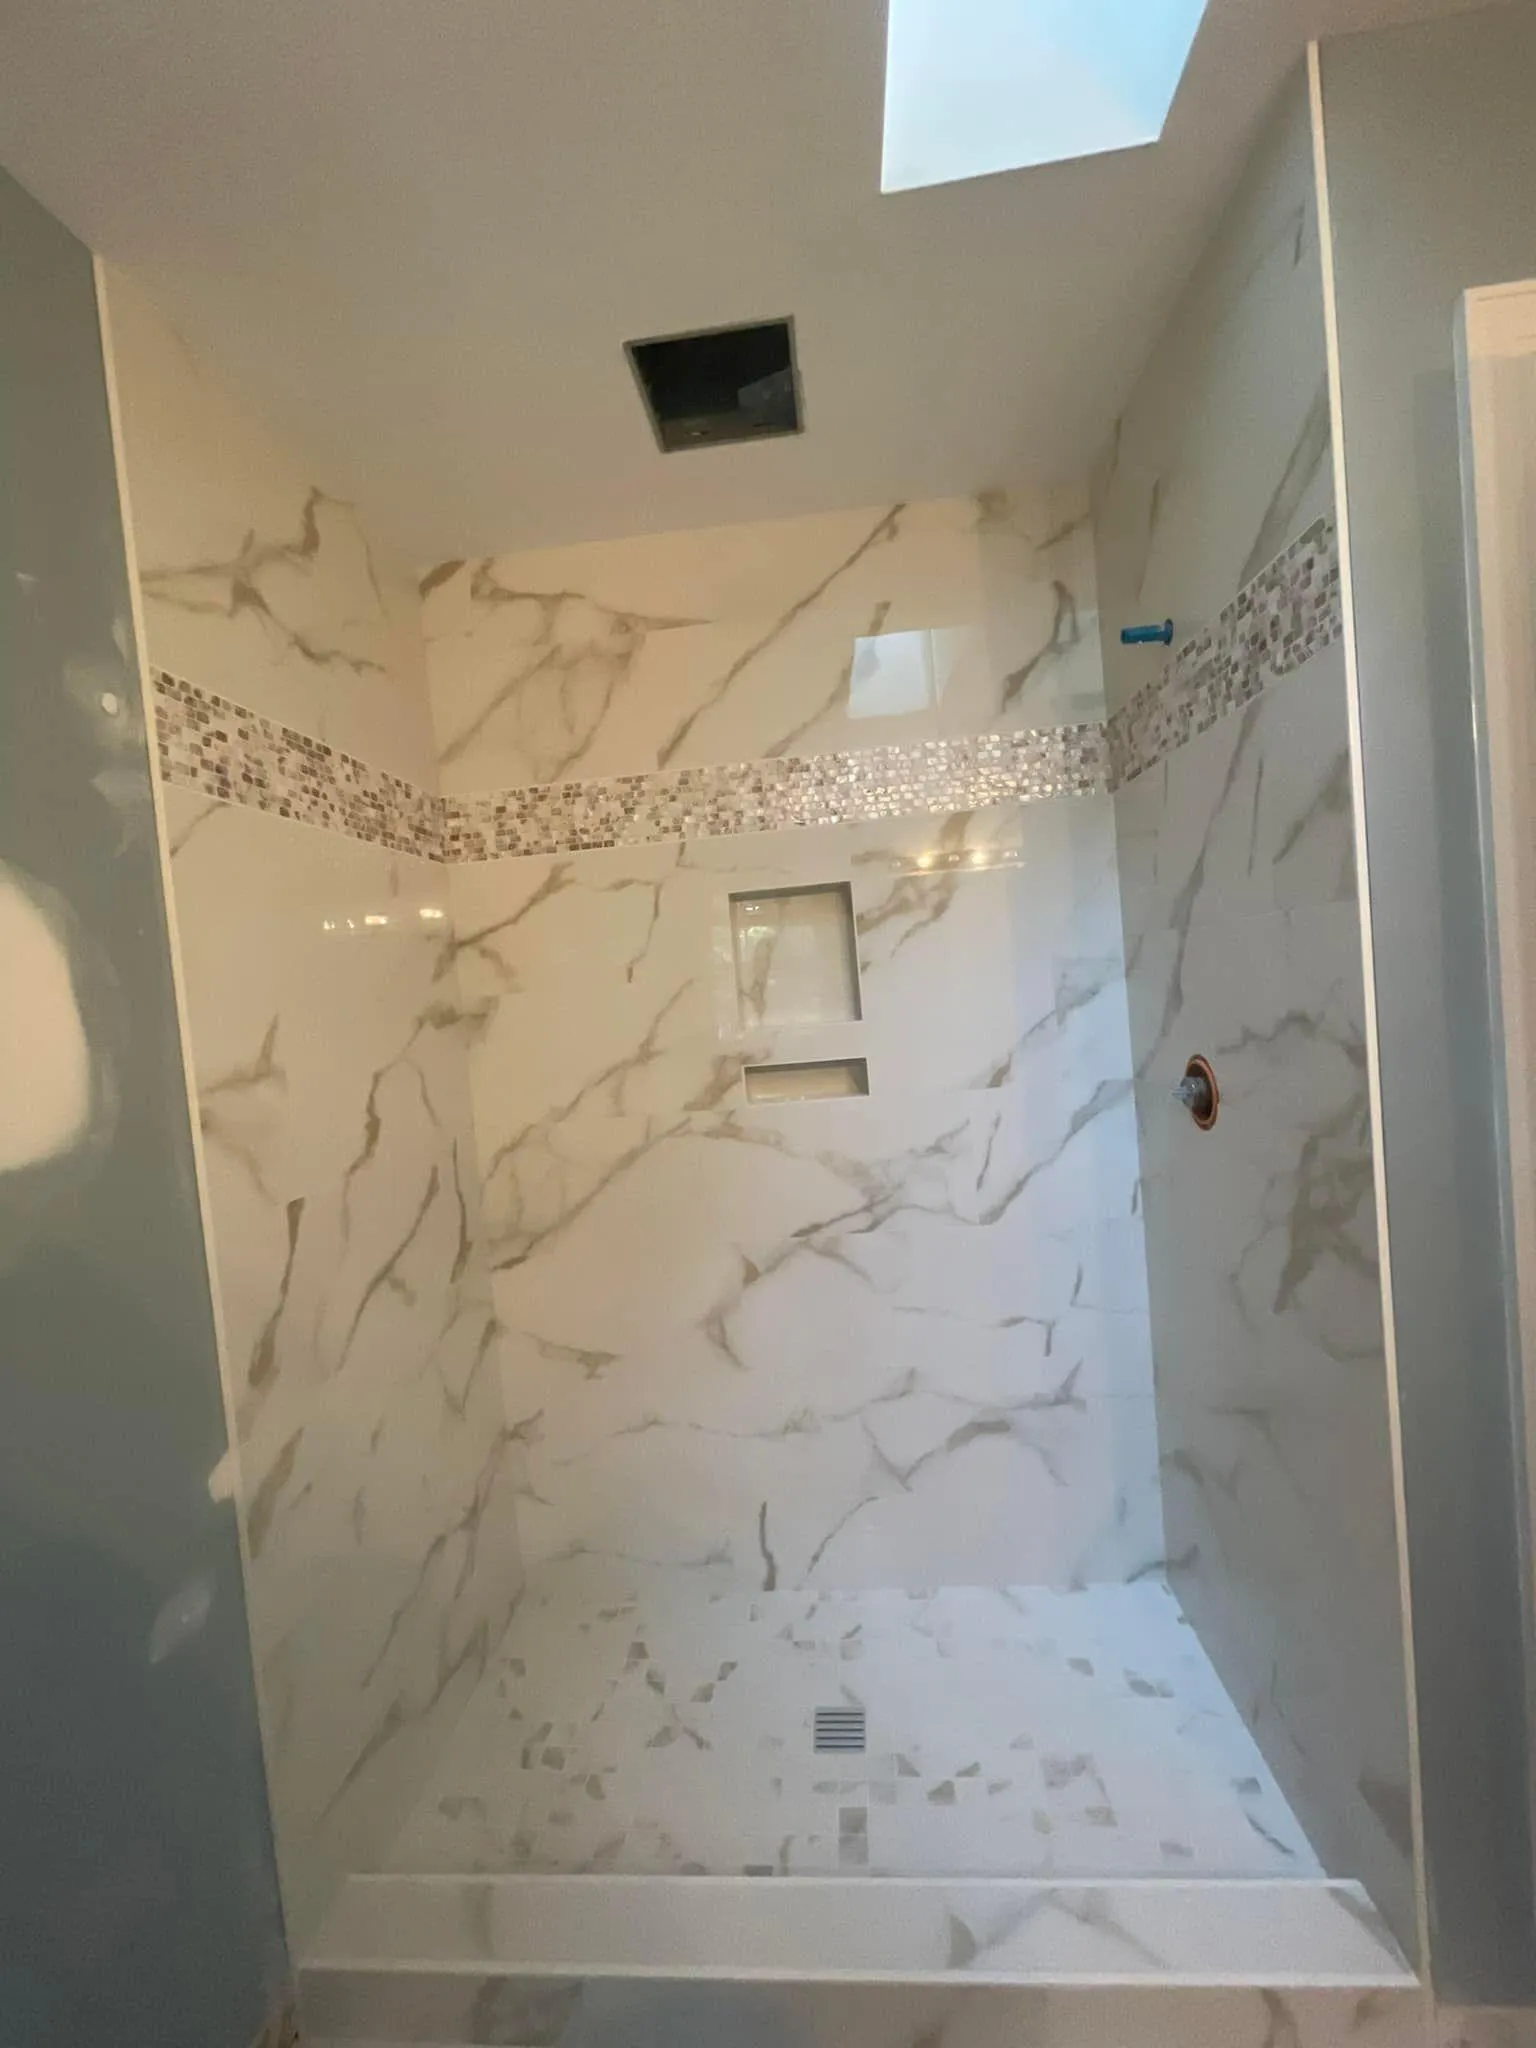 Bathroom Renovation for SlickStone Contracting in Richmond, VA